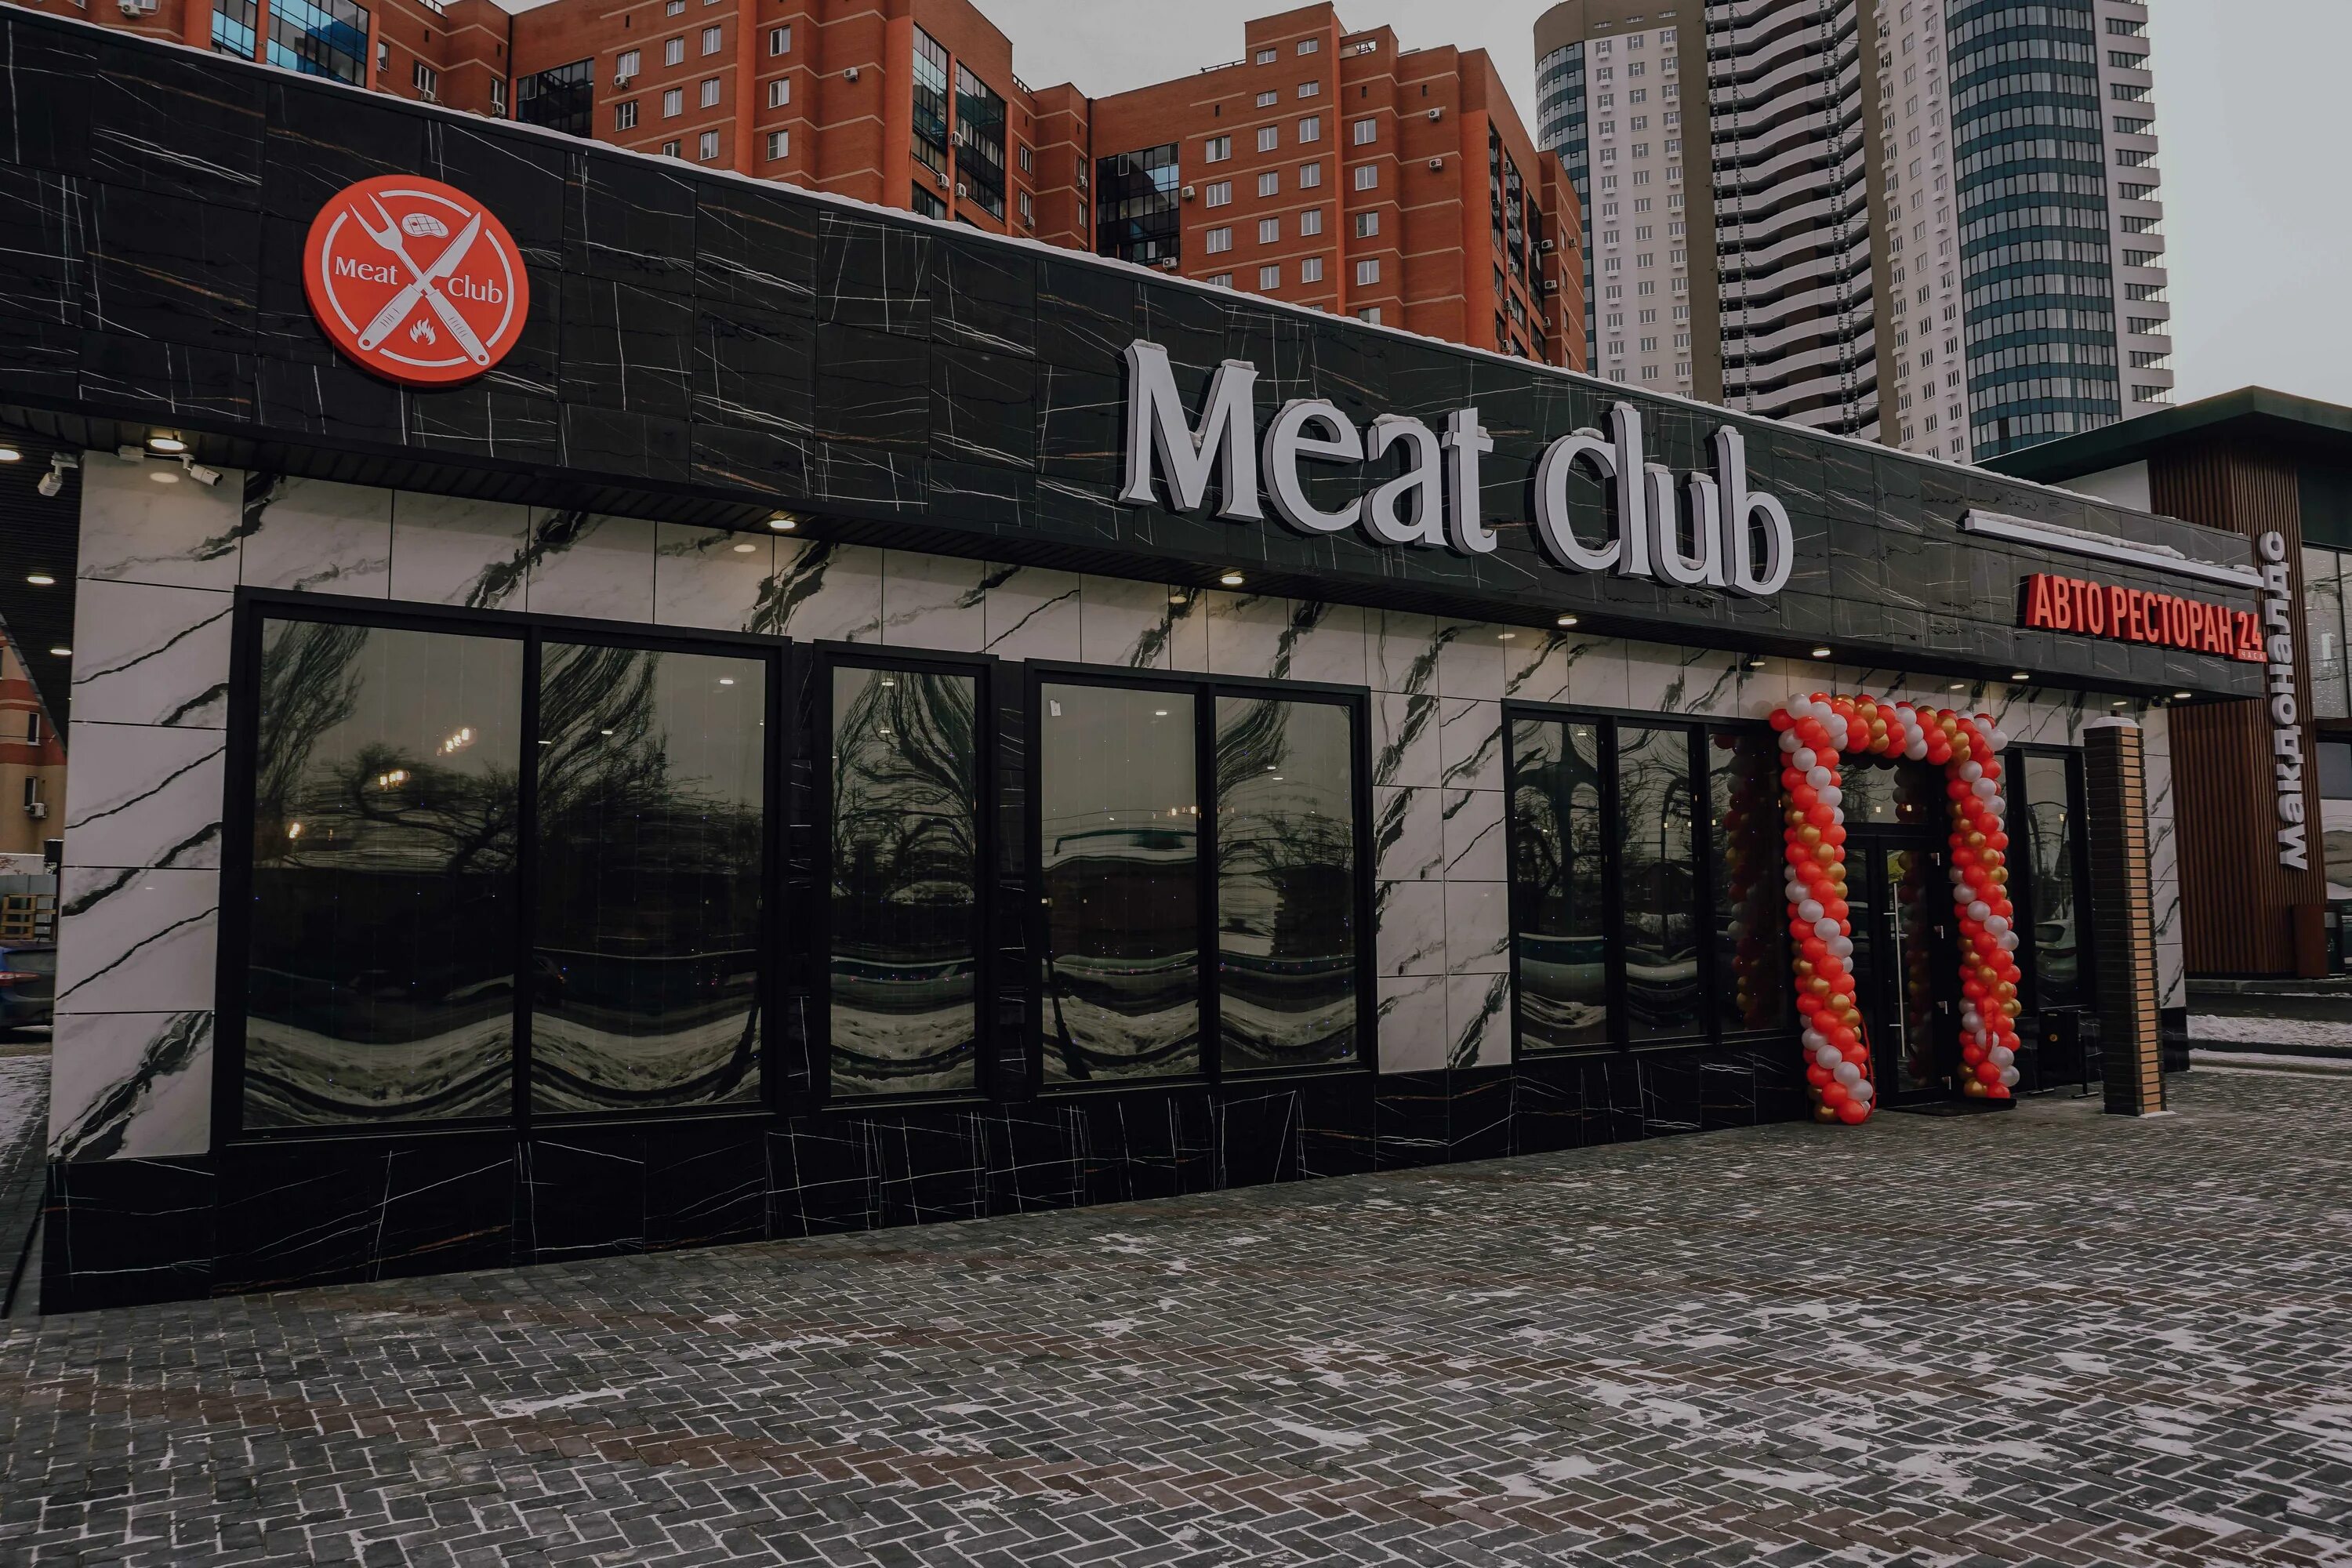 Meat Club Самара. Московское шоссе 25б Самара. Meat Club Самара авто ресторан. Ресторан Московское шоссе 25 б. Московская 25 б